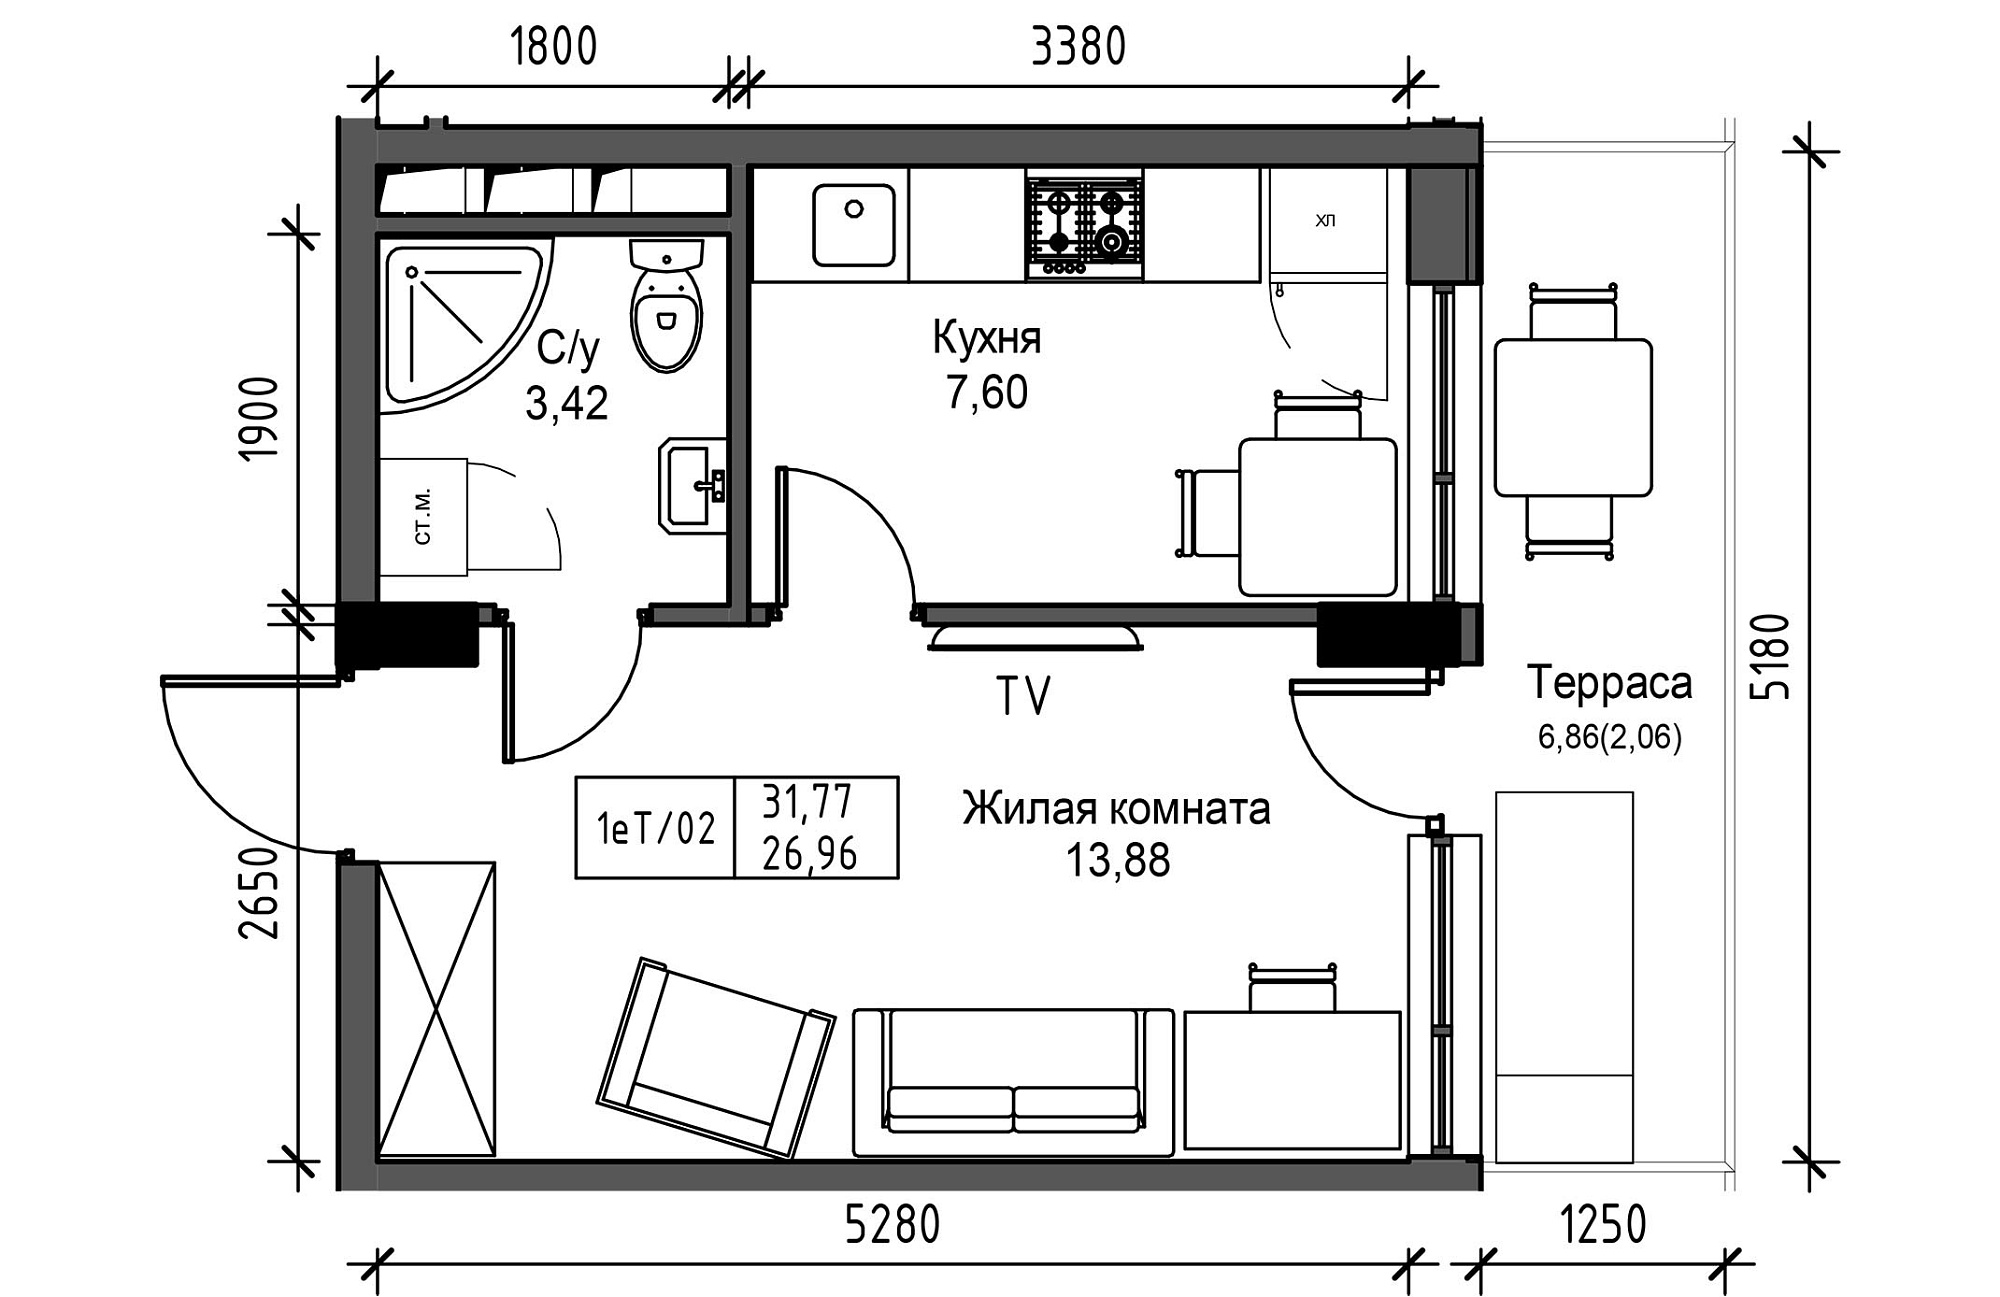 Планування 1-к квартира площею 26.96м2, UM-003-11/0113.